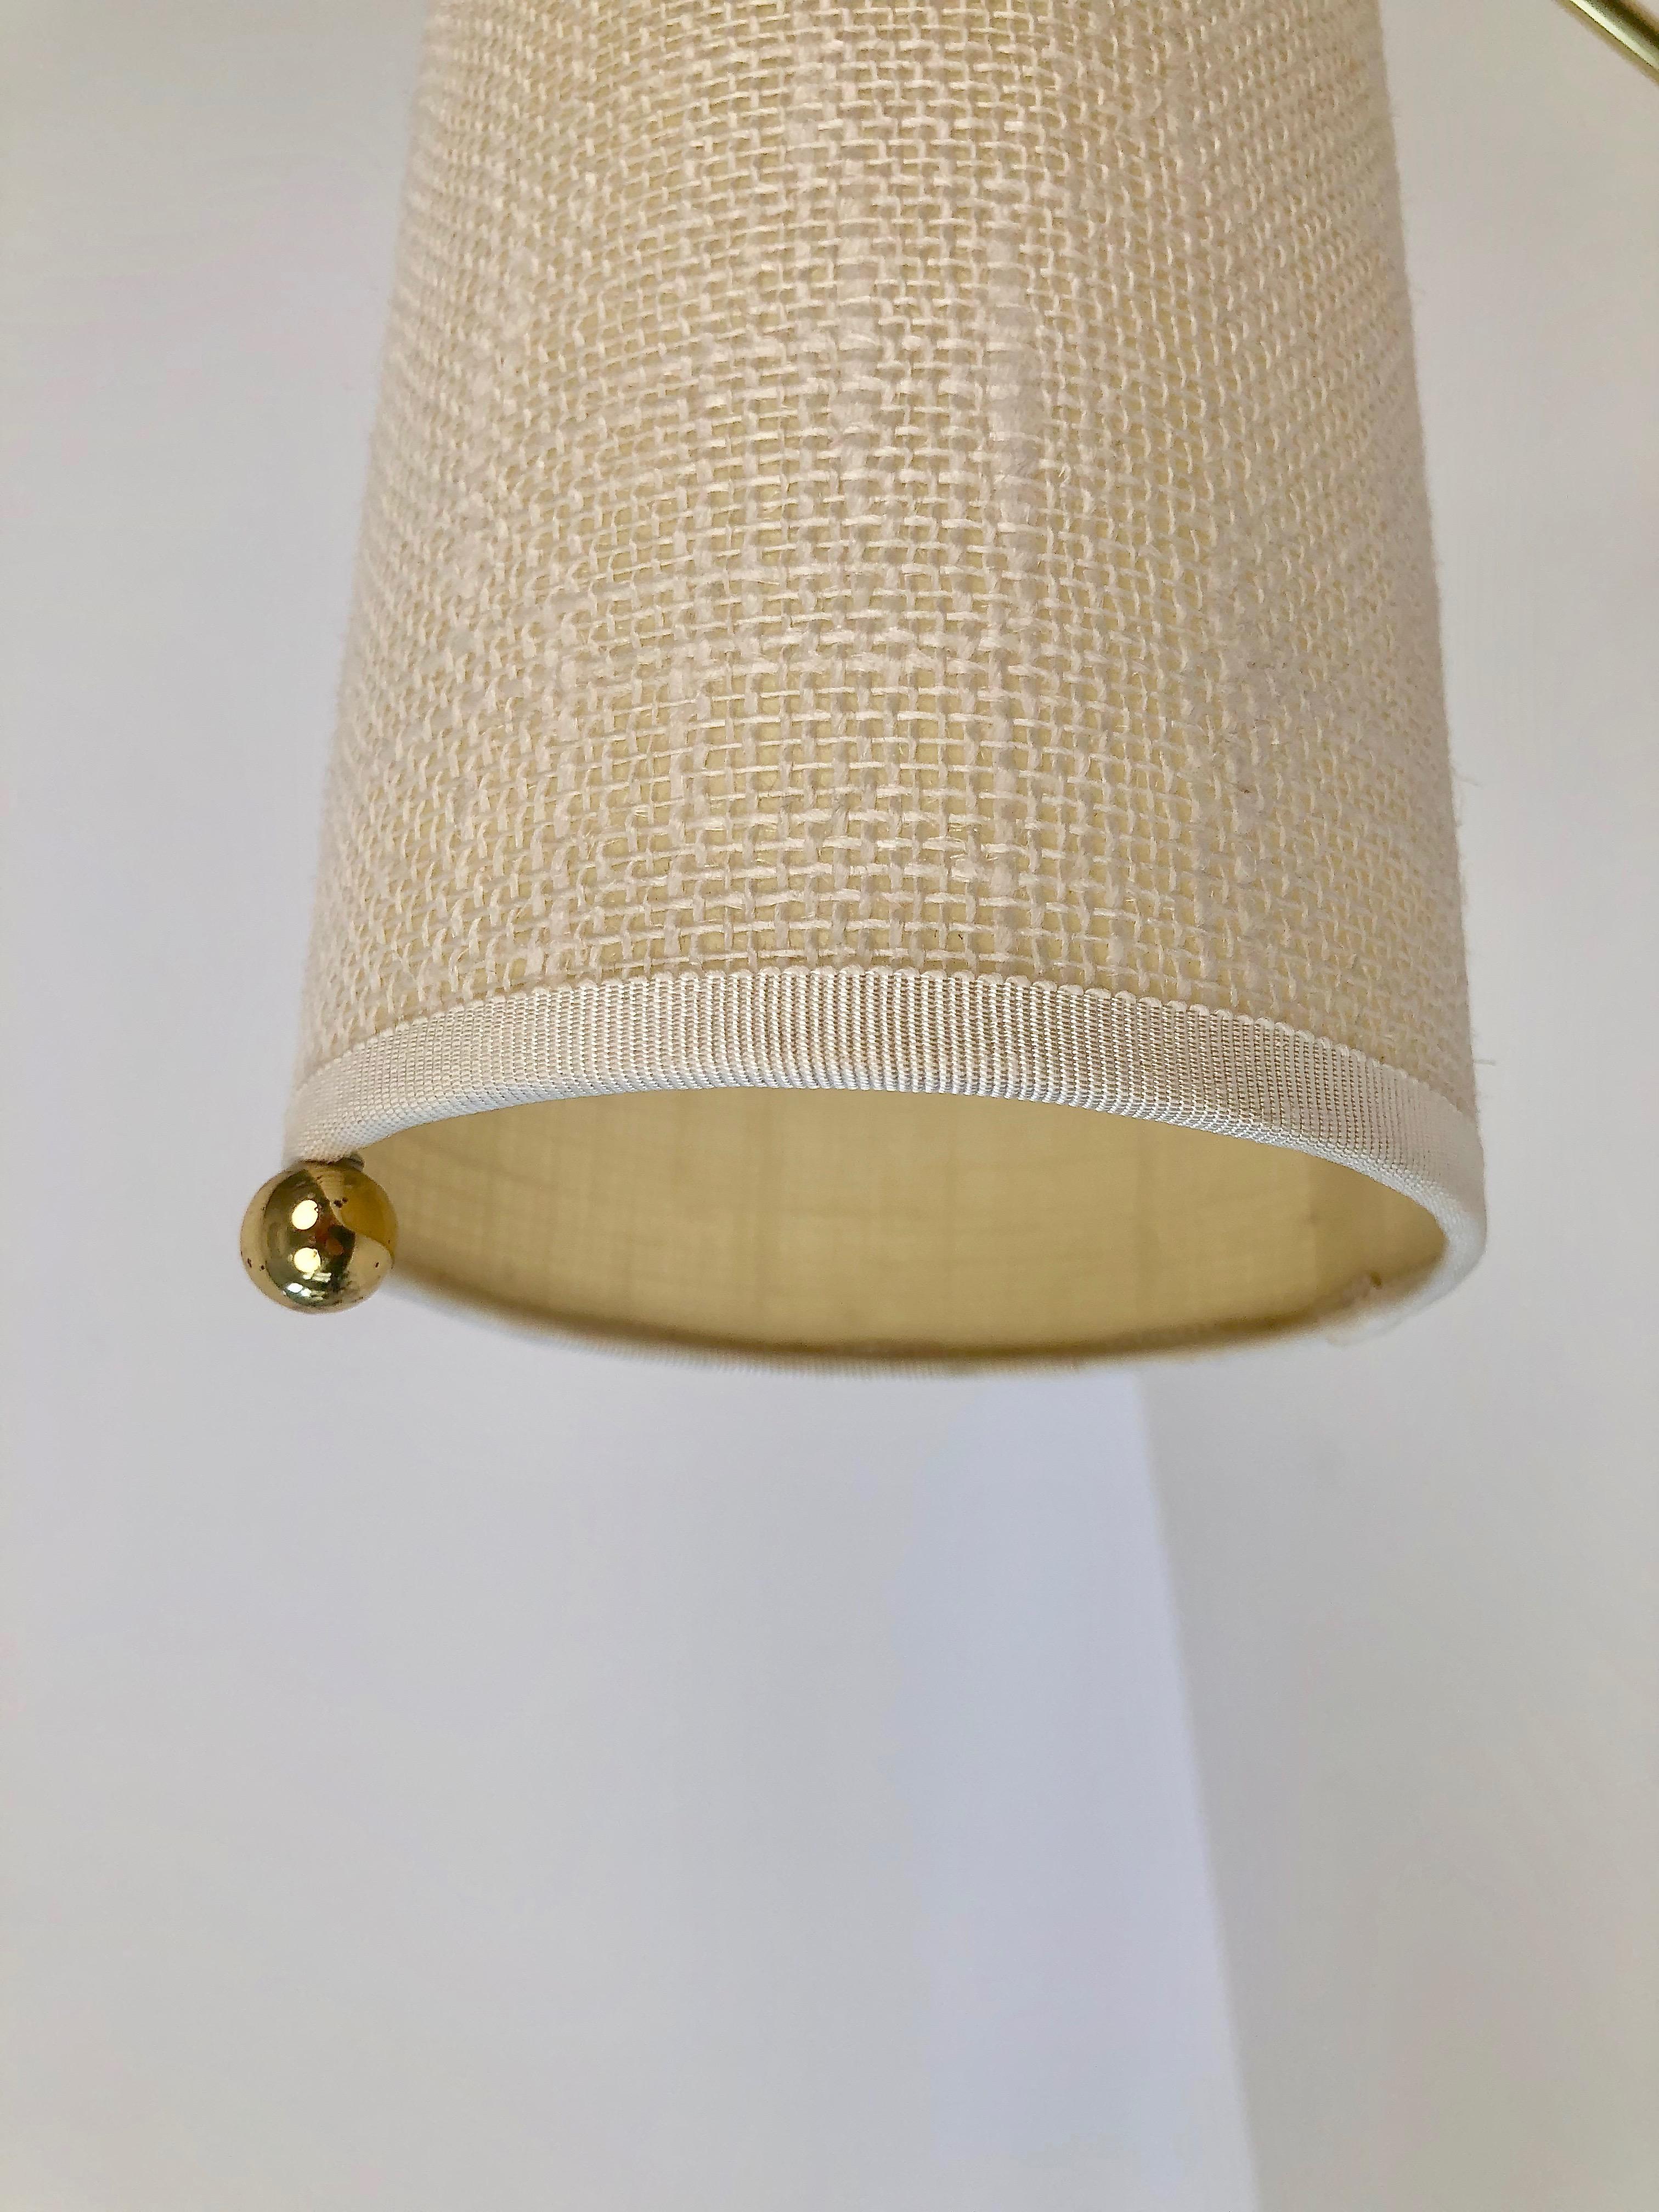 Austrian Adjustable Wall Light in Brass with Linen Shade 1960, Austria